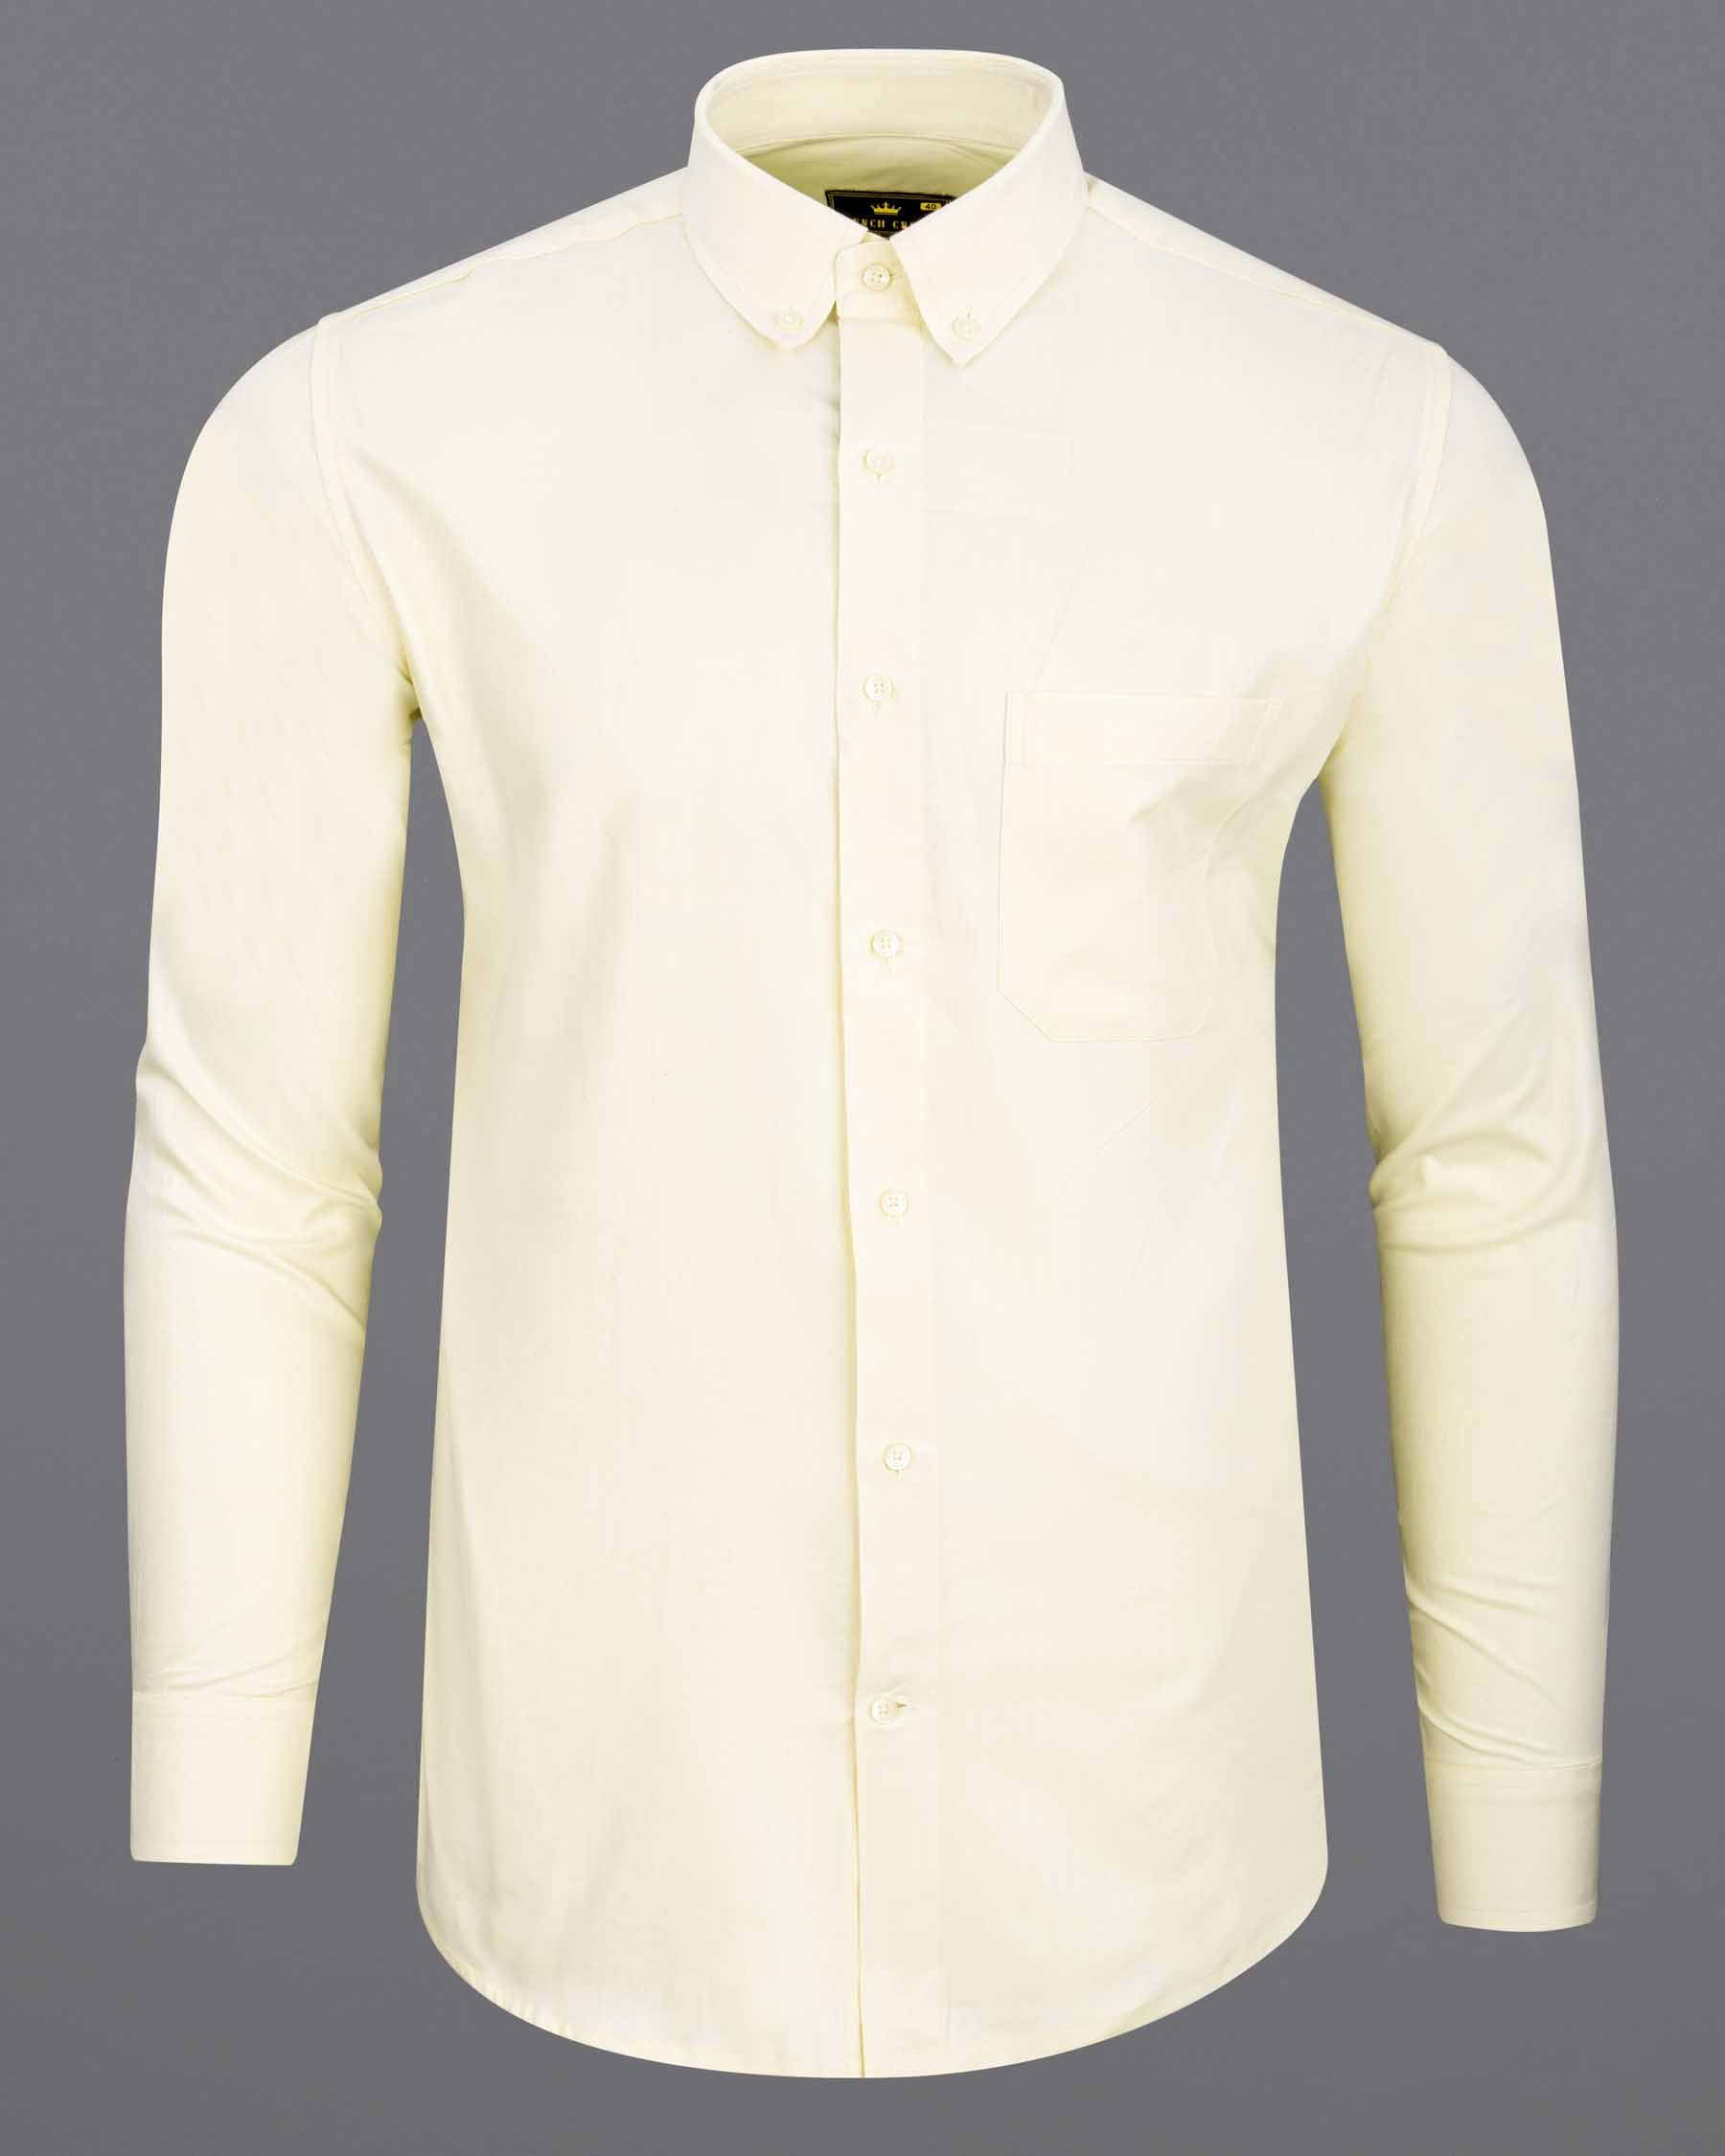 Wheatfield Yellow Twill Textured Premium Cotton Shirt